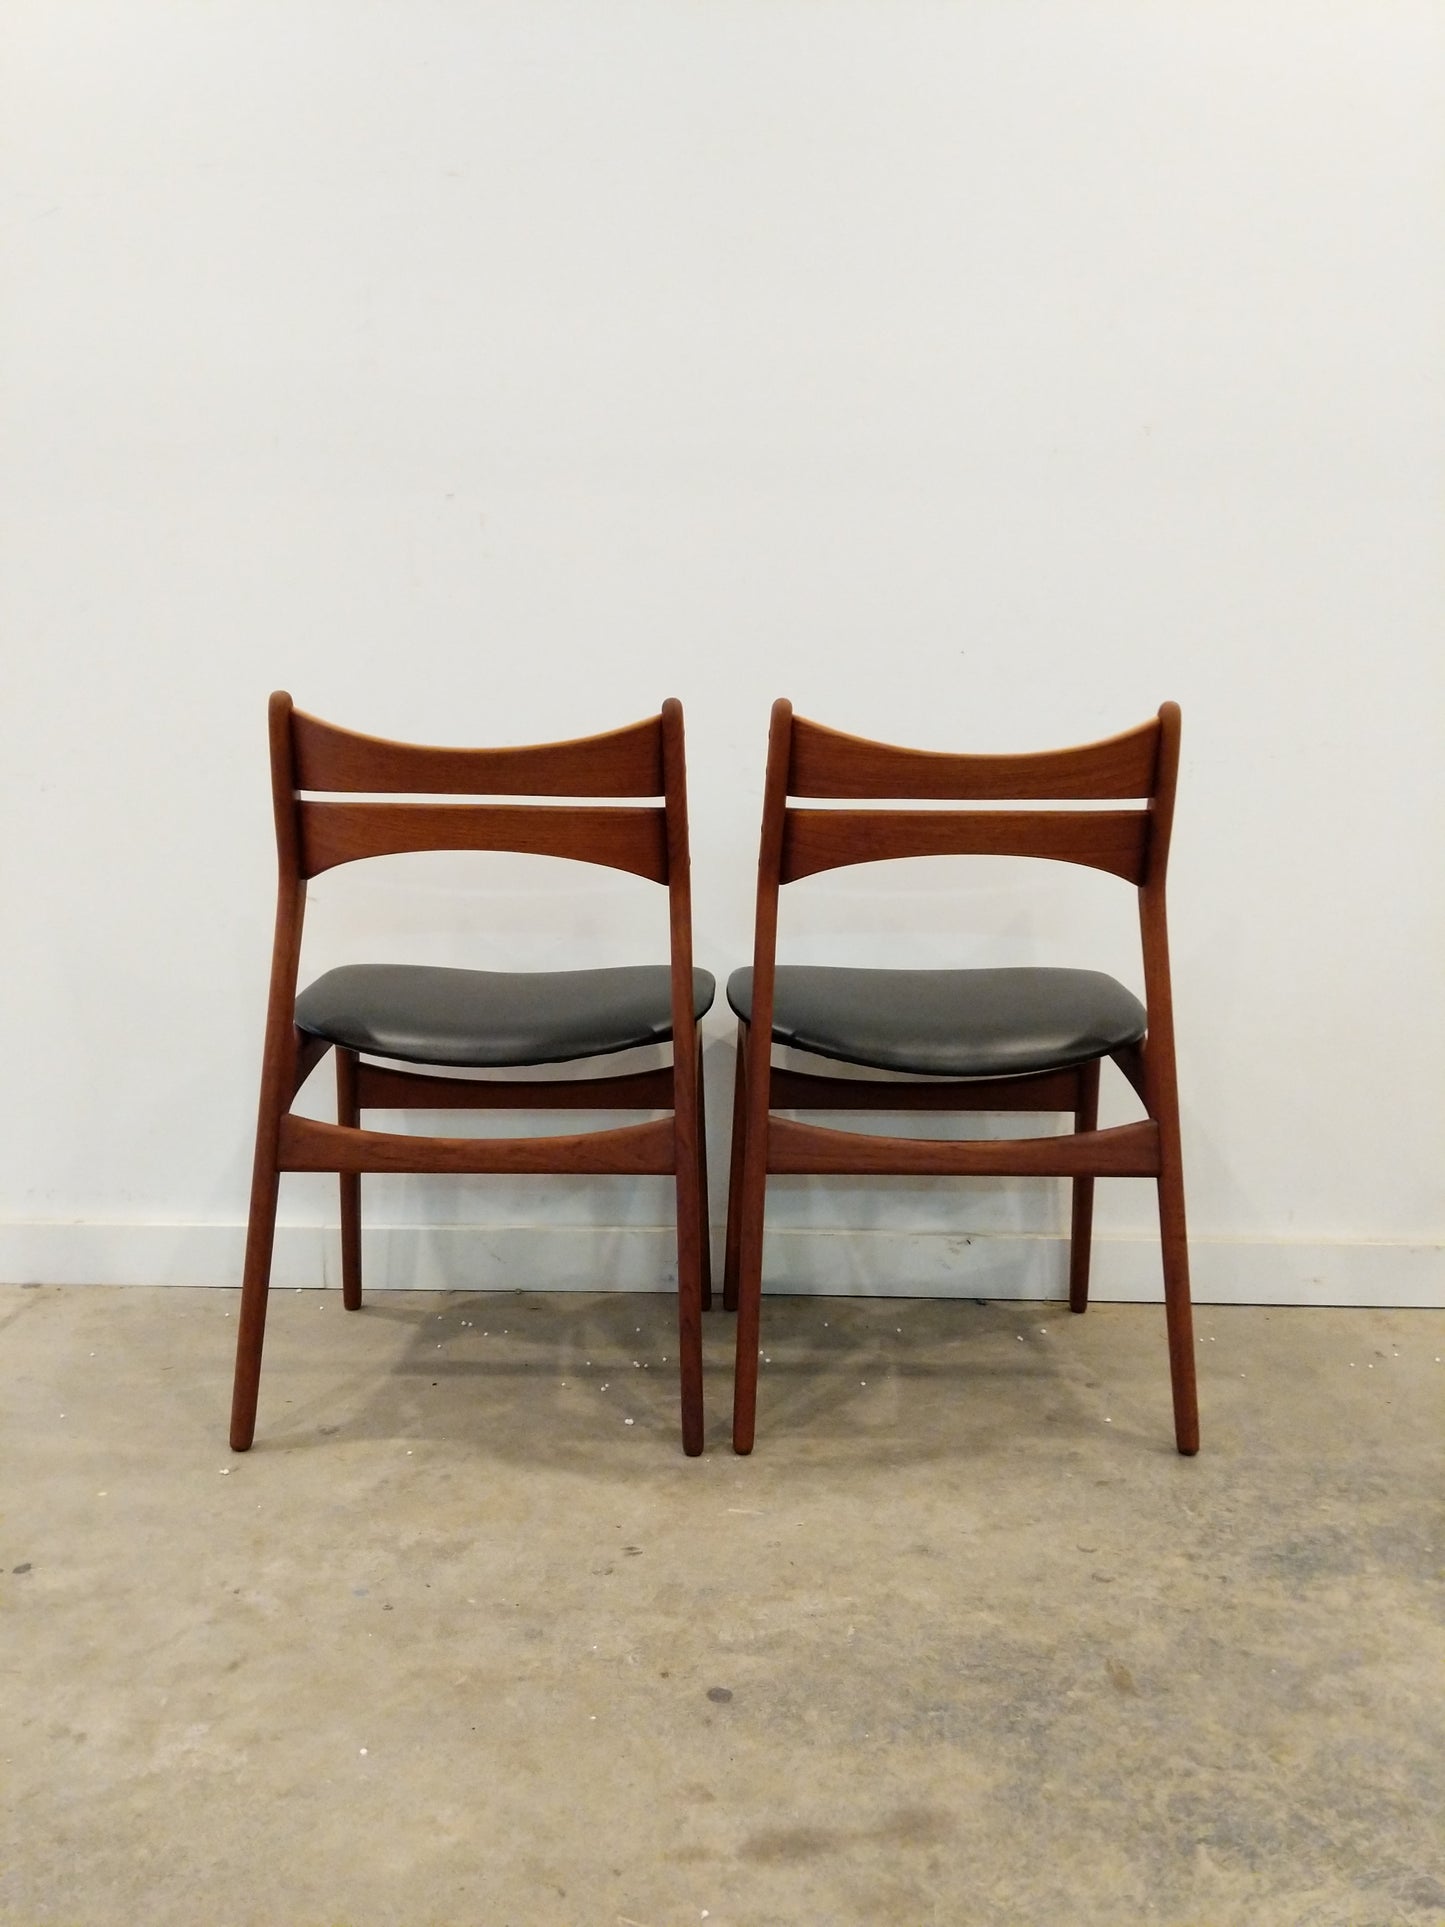 Pair of Vintage Danish Modern Chairs by Erik Buch